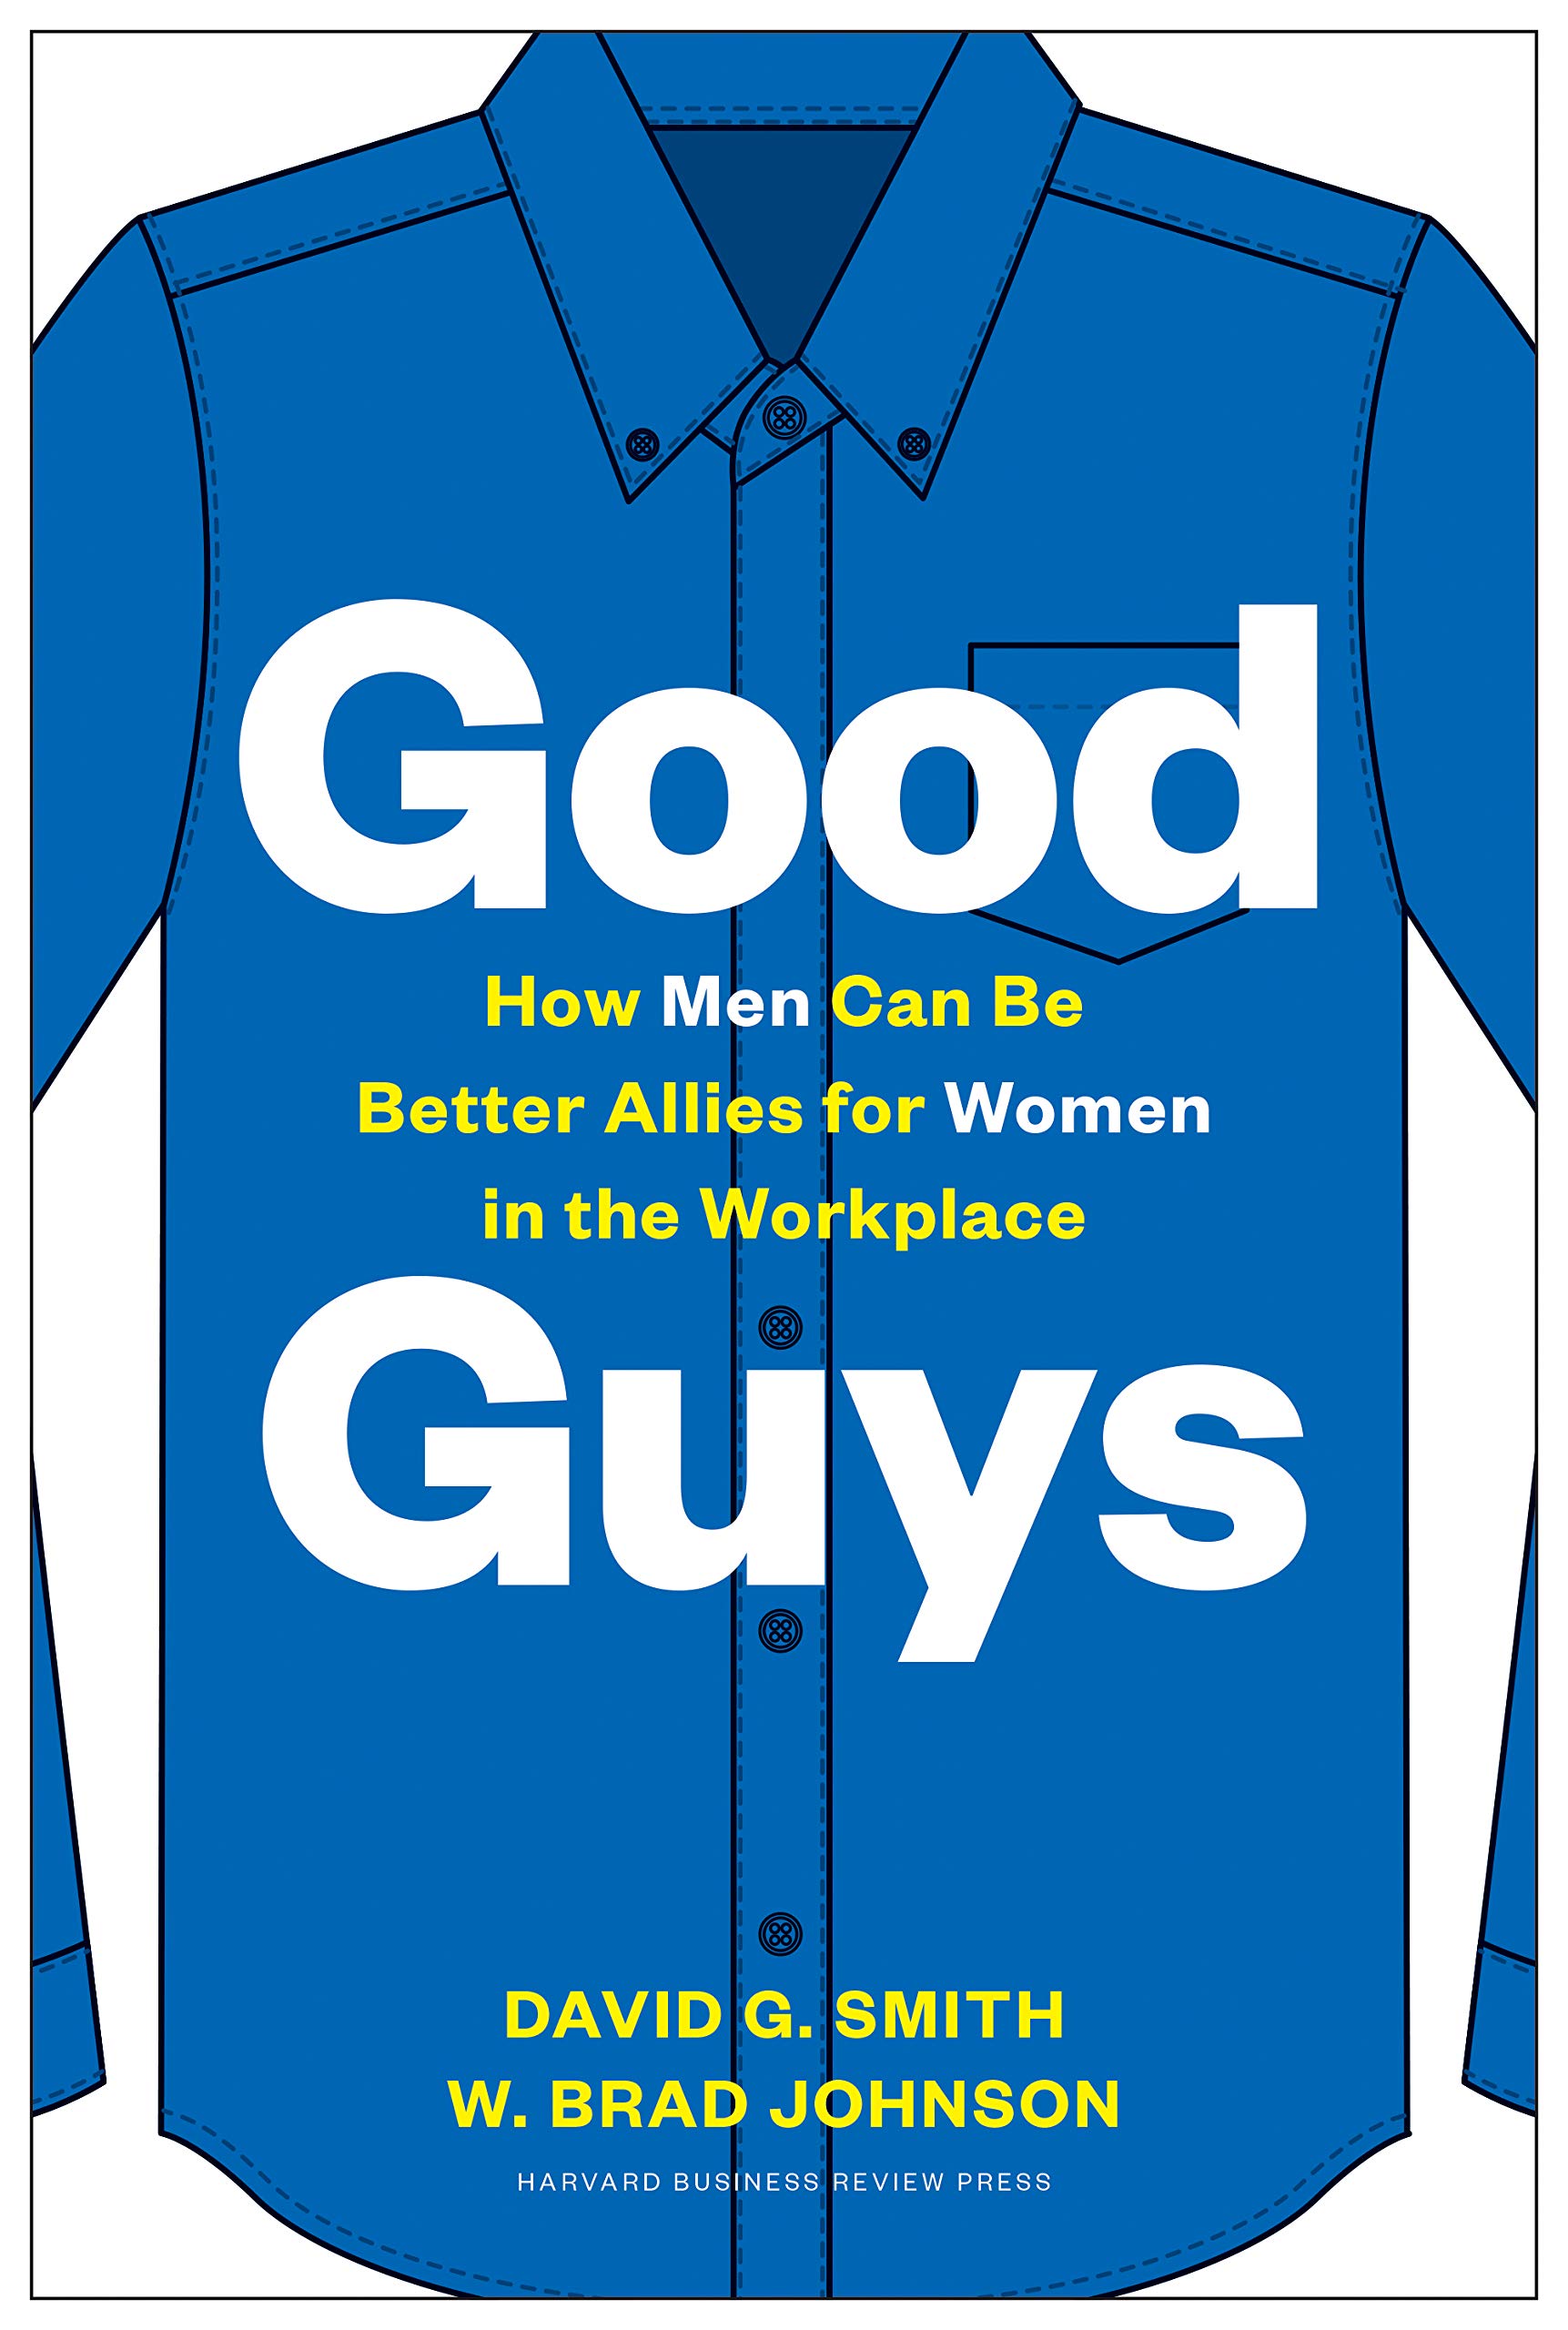 Image for "Good Guys"